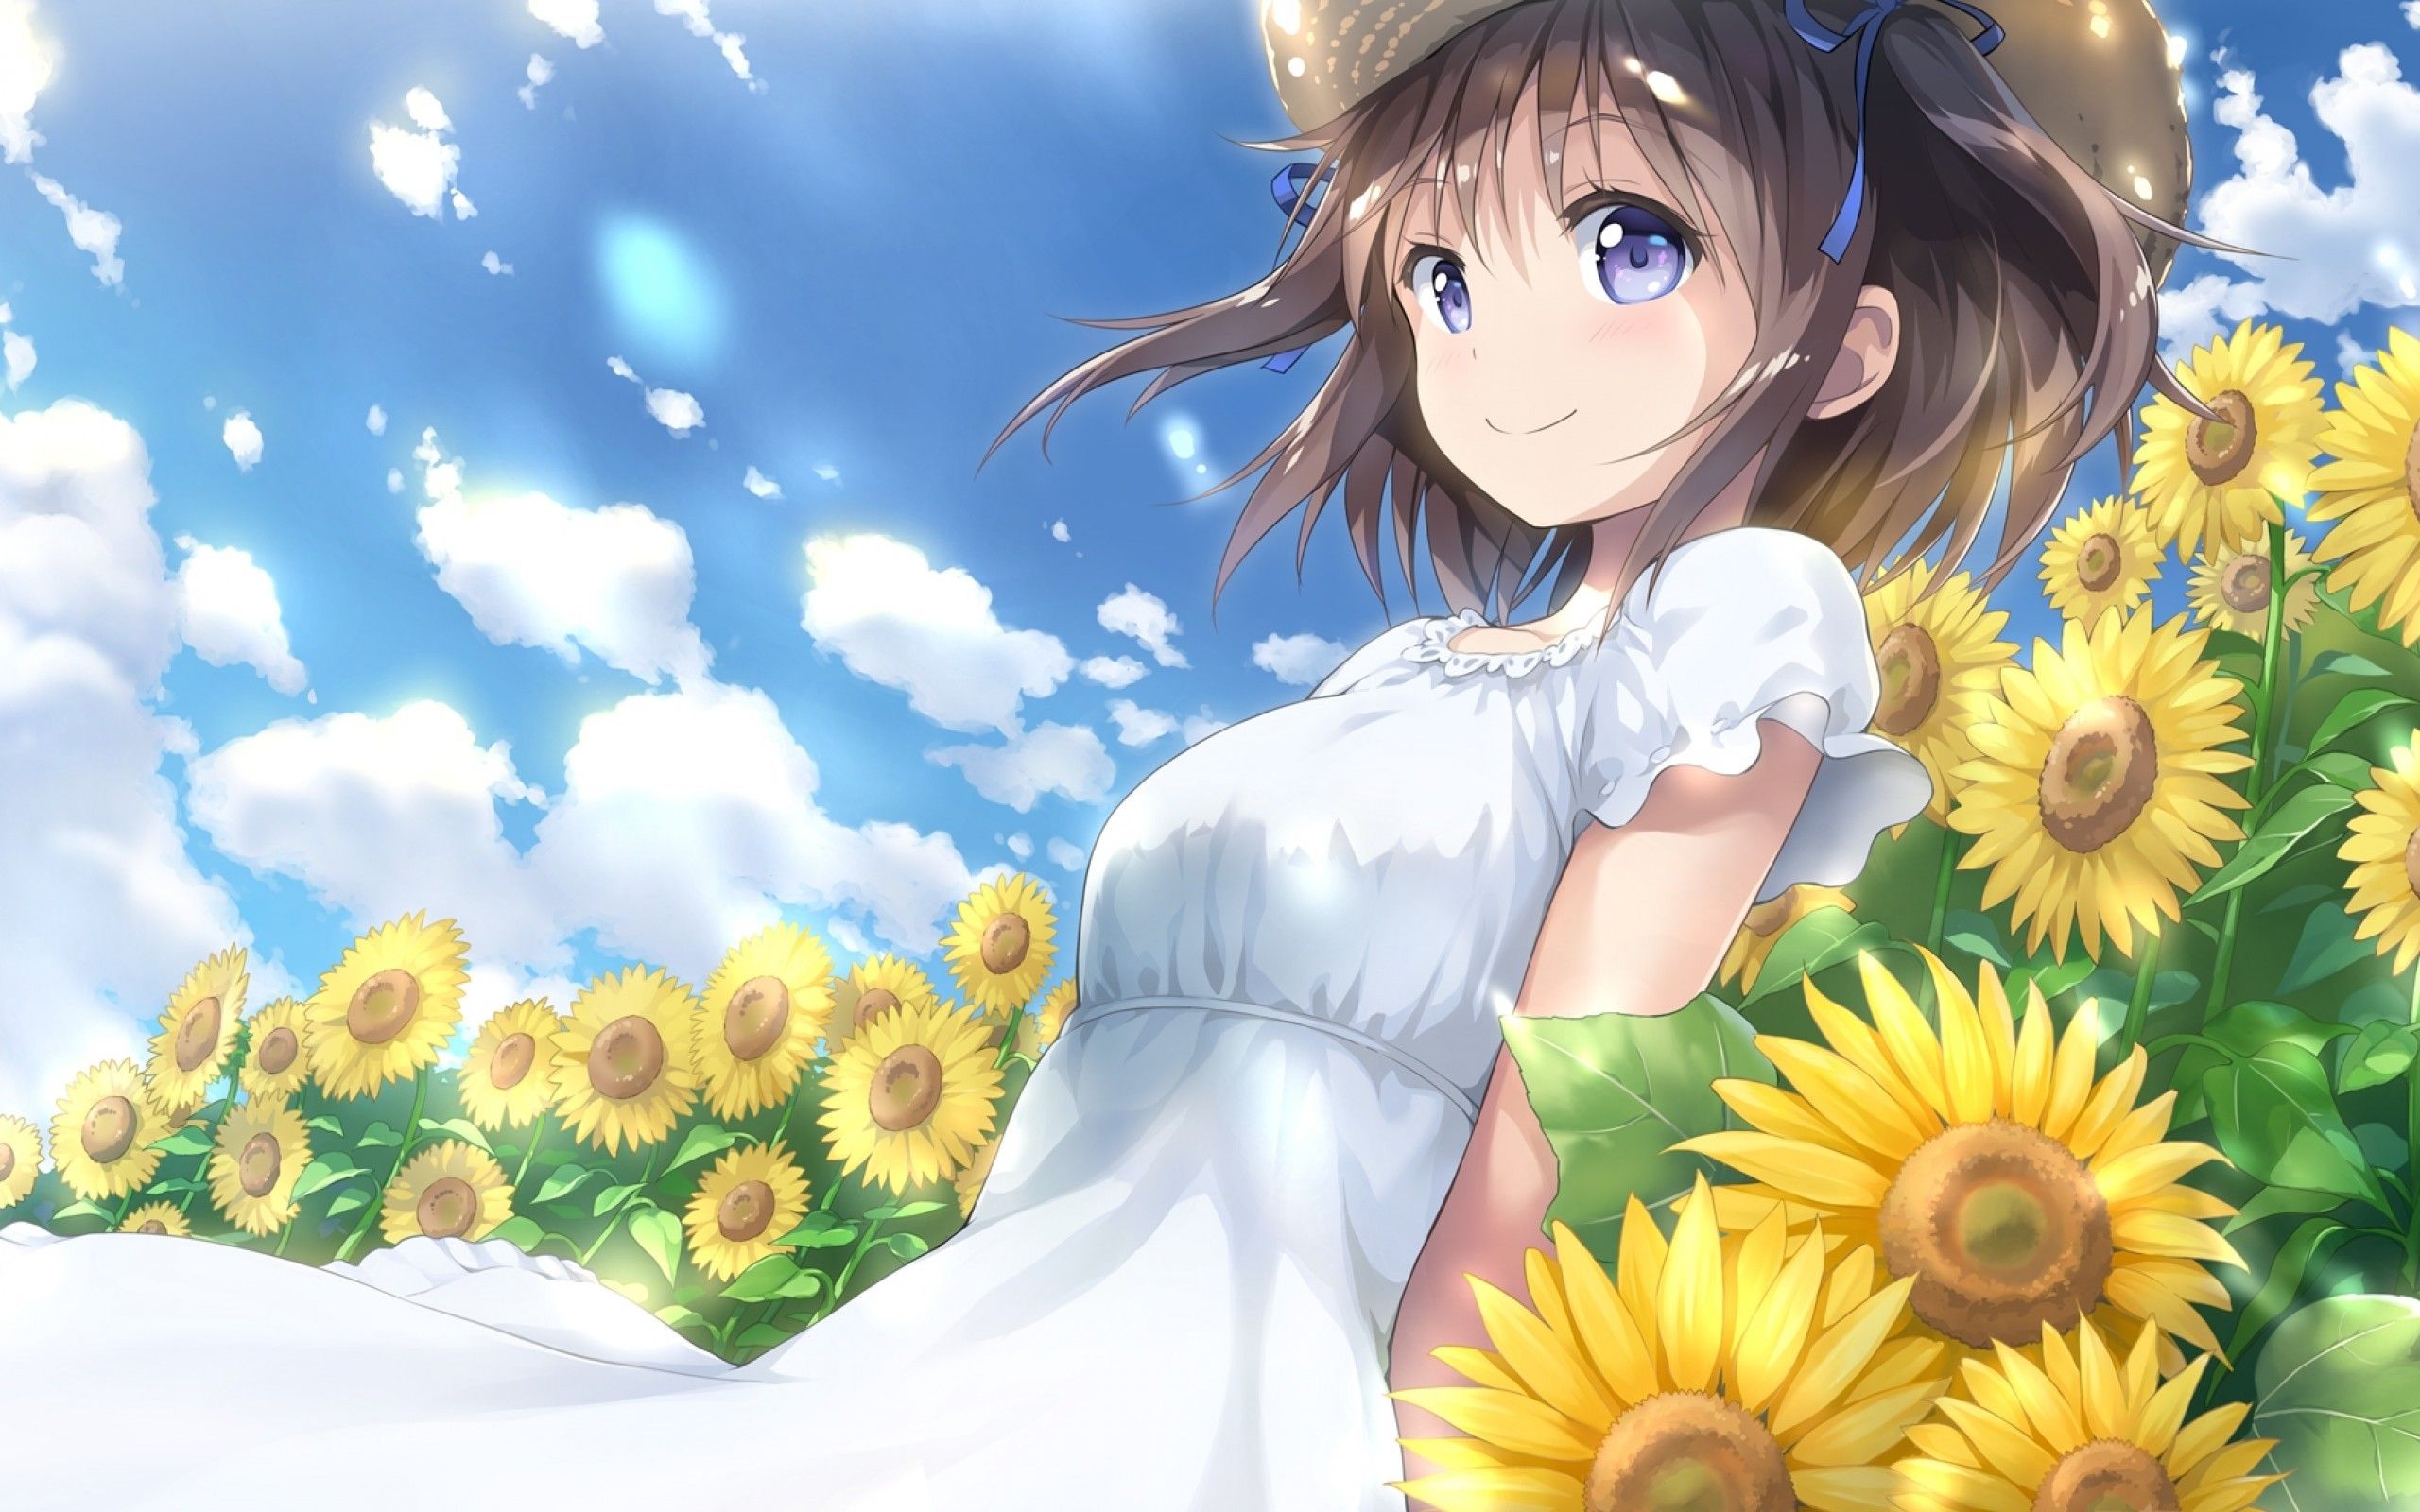 Download 2560x1600 Sunflowers, Summer, Dress, Short Hair, Anime Girl Wallpaper for MacBook Pro 13 inch